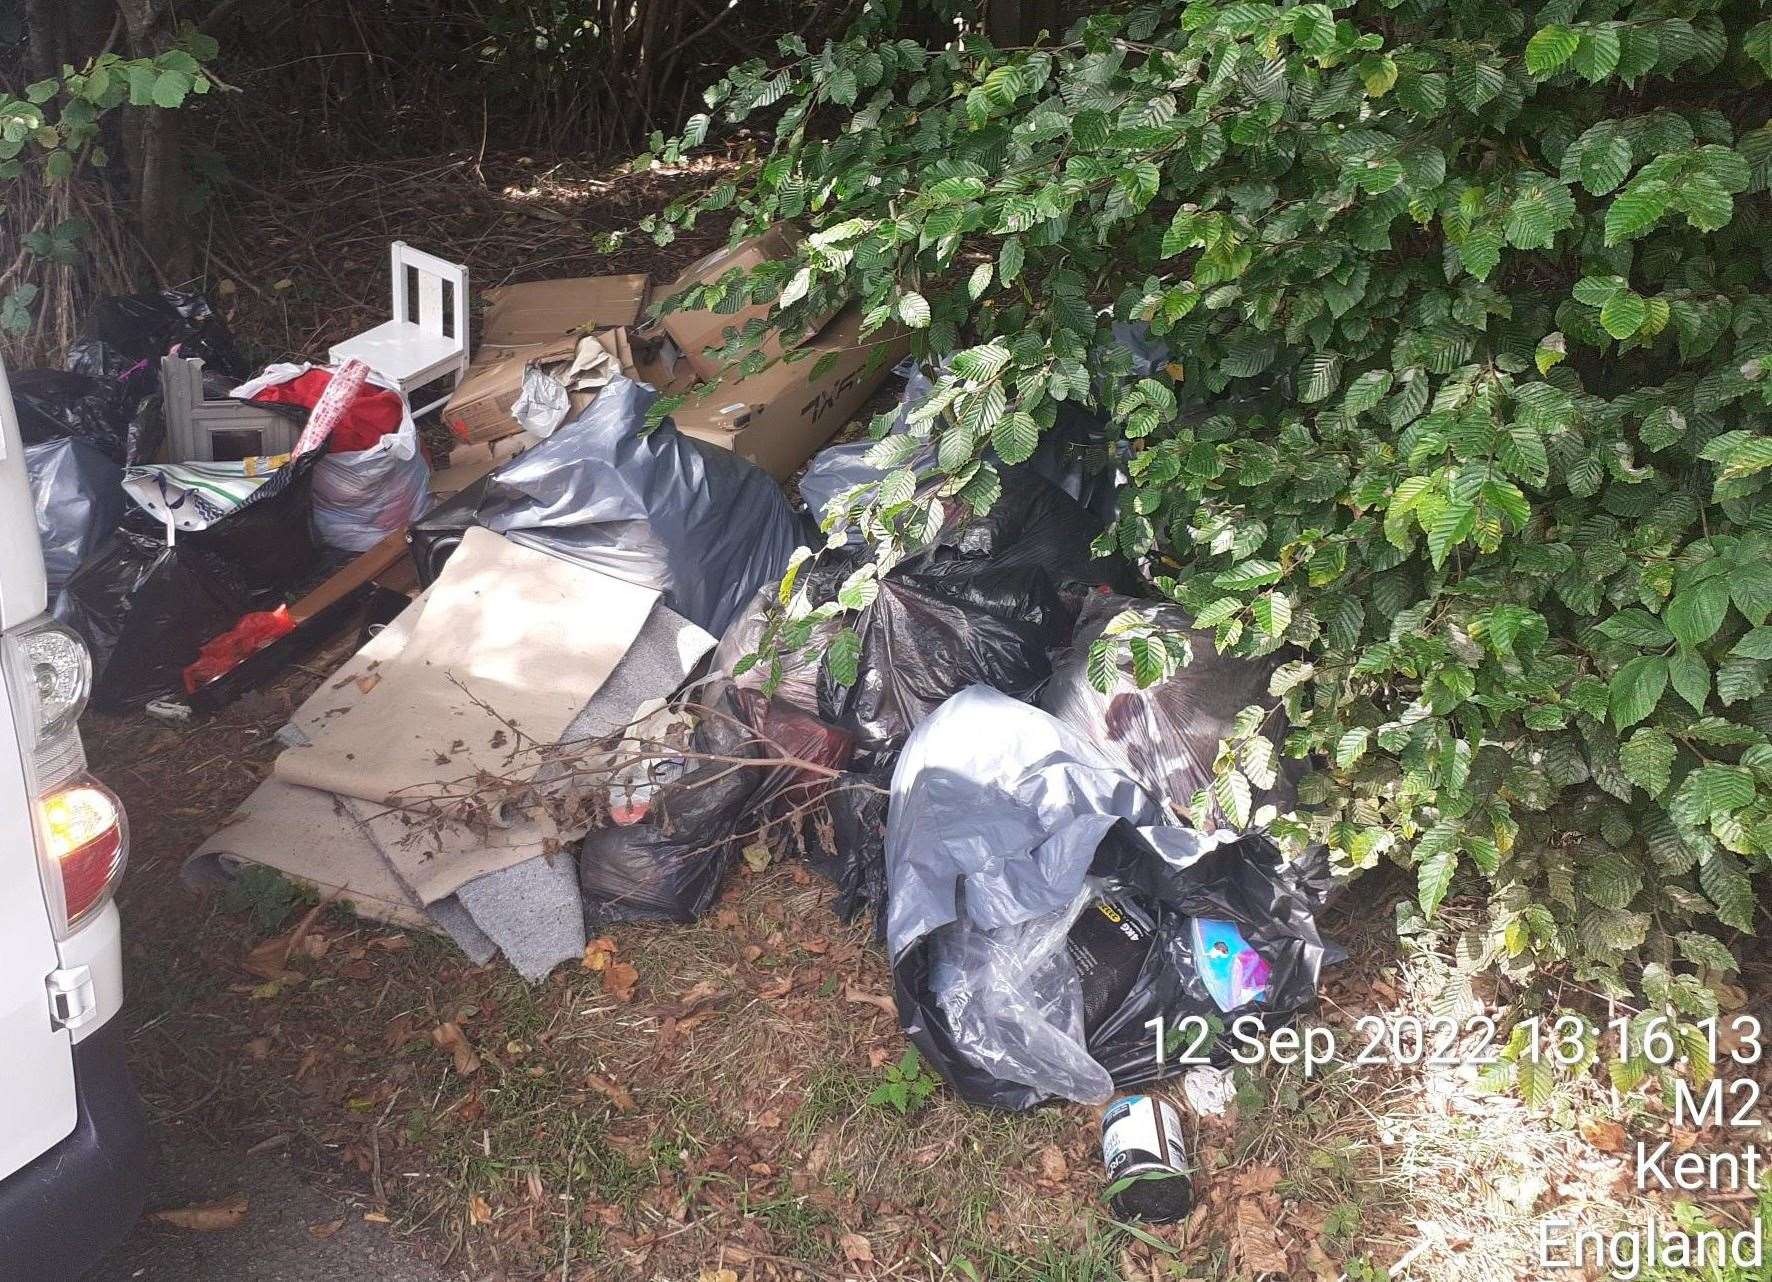 The rubbish was dumped around Faversham. Picture: Swale Borough Council